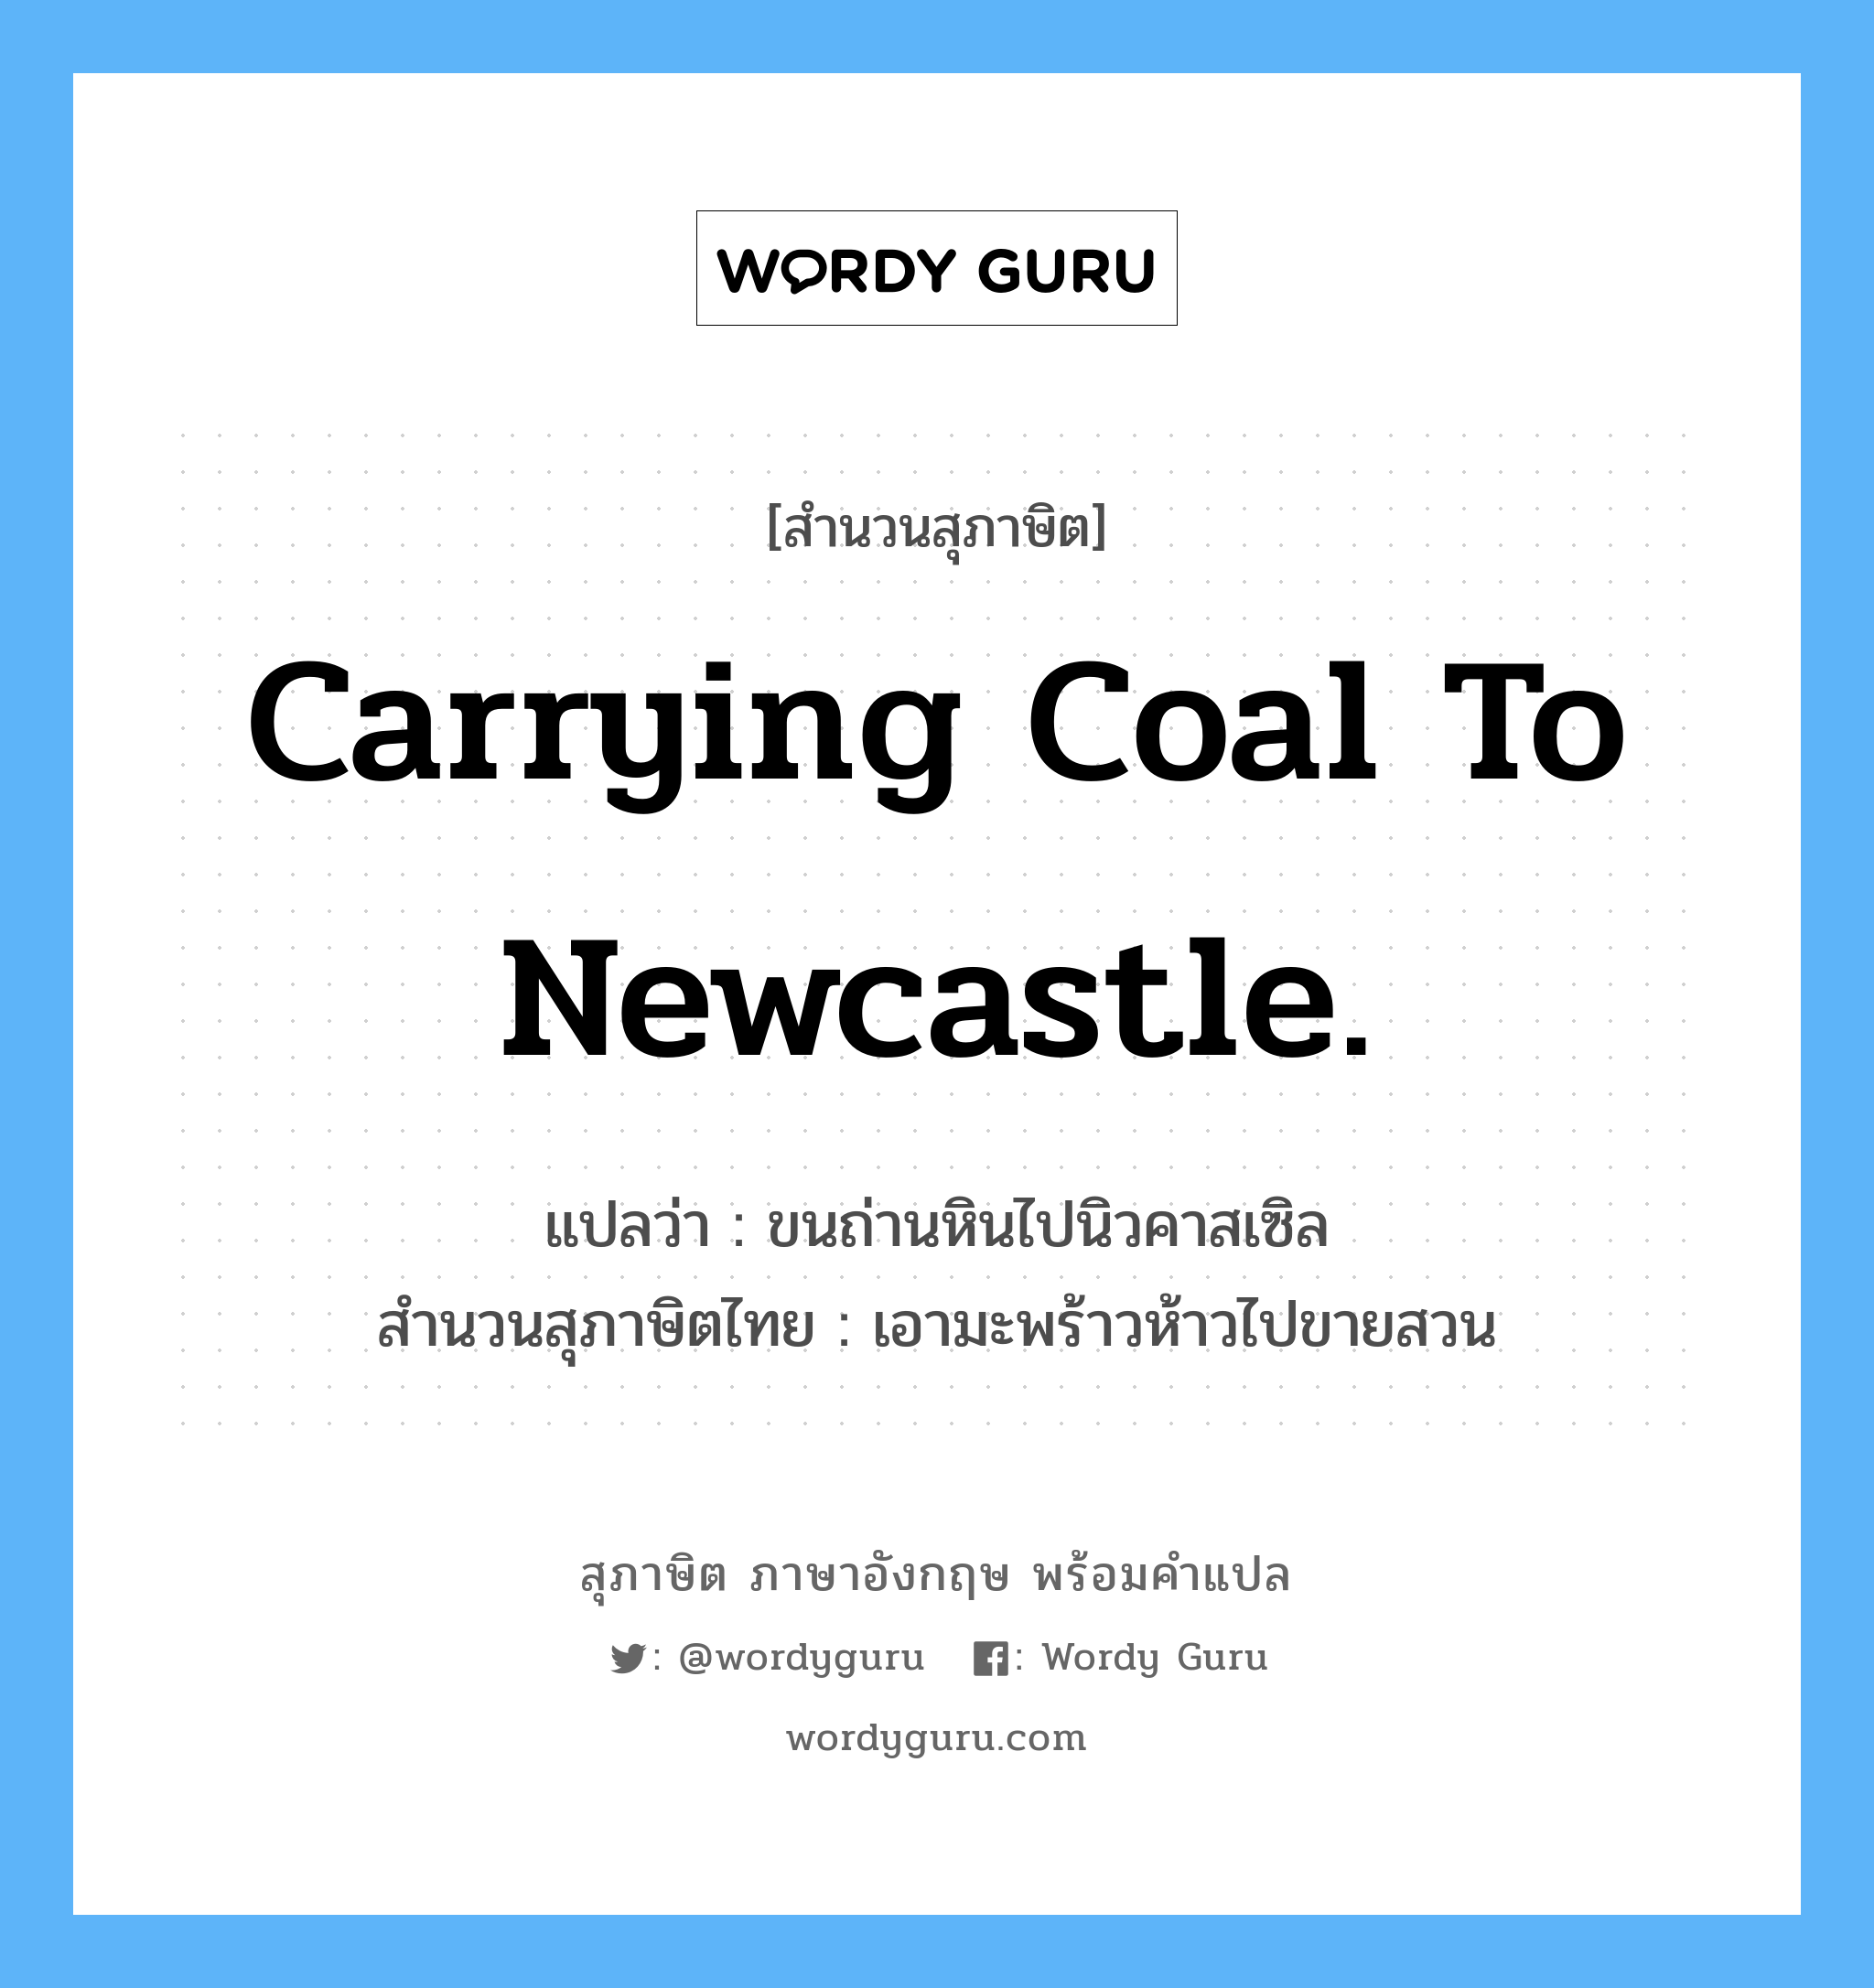 Carrying coal to Newcastle. แปลว่า?, สำนวนสุภาษิต ภาษาอังกฤษ Carrying coal to Newcastle. แปลว่า ขนถ่านหินไปนิวคาสเซิล สำนวนสุภาษิตไทย เอามะพร้าวห้าวไปขายสวน